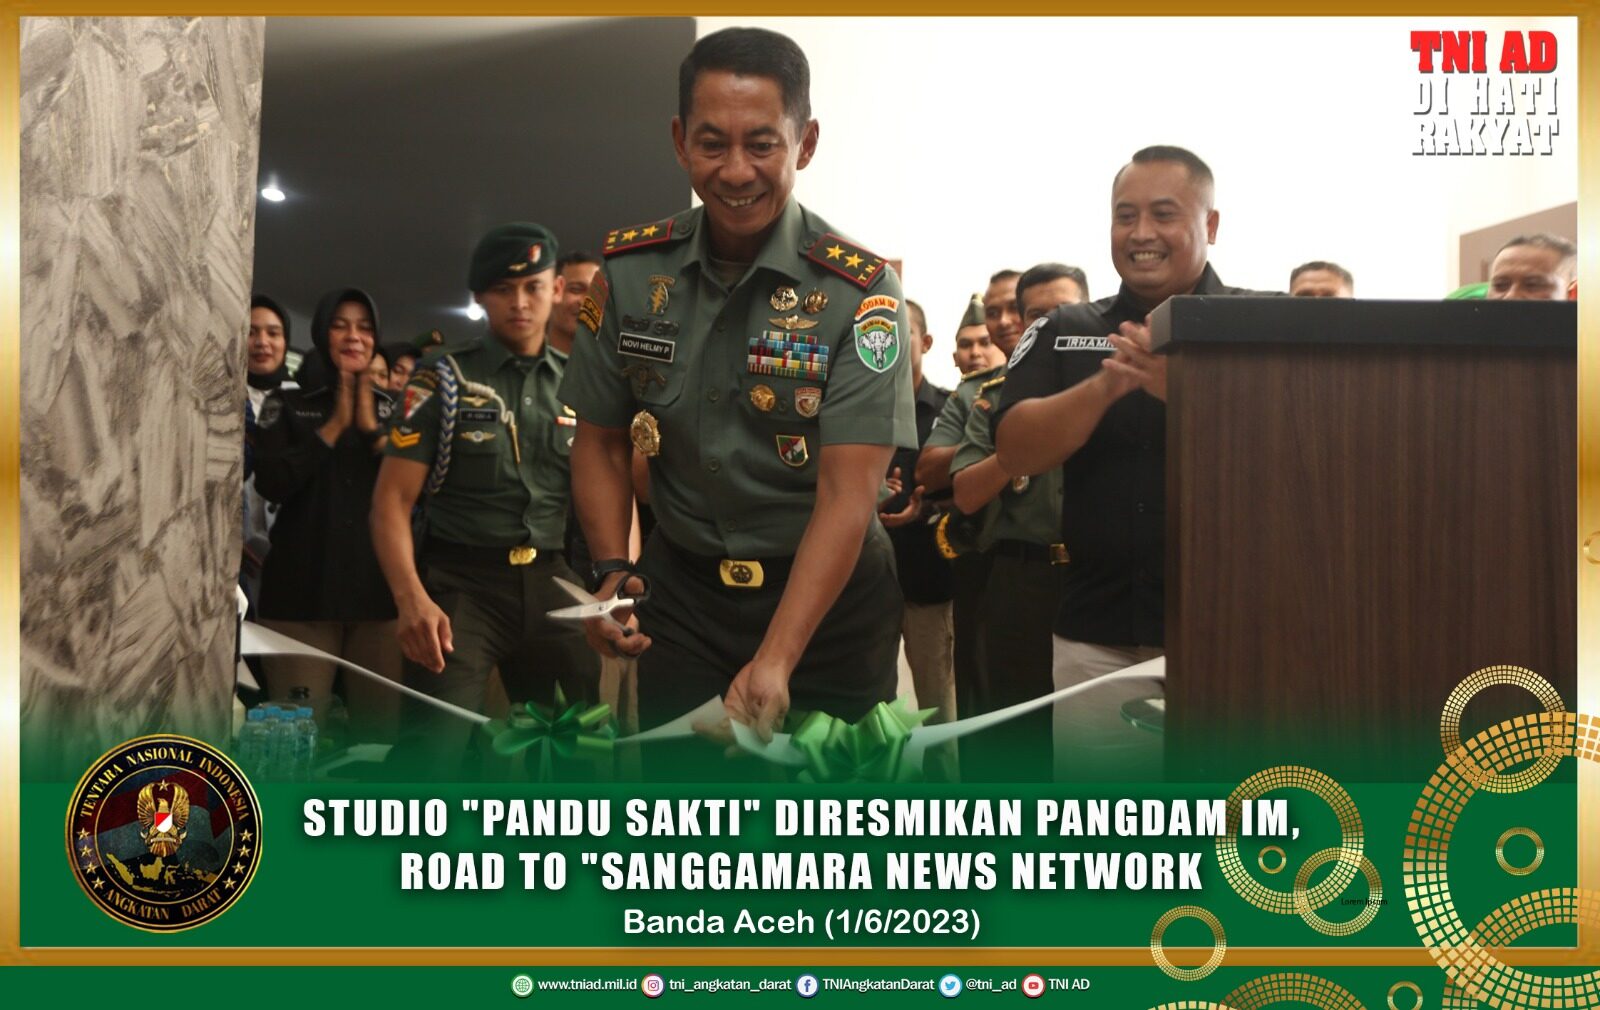 Studio "Pandu Sakti" Diresmikan Pangdam IM, Road To "Sanggamara News Network"